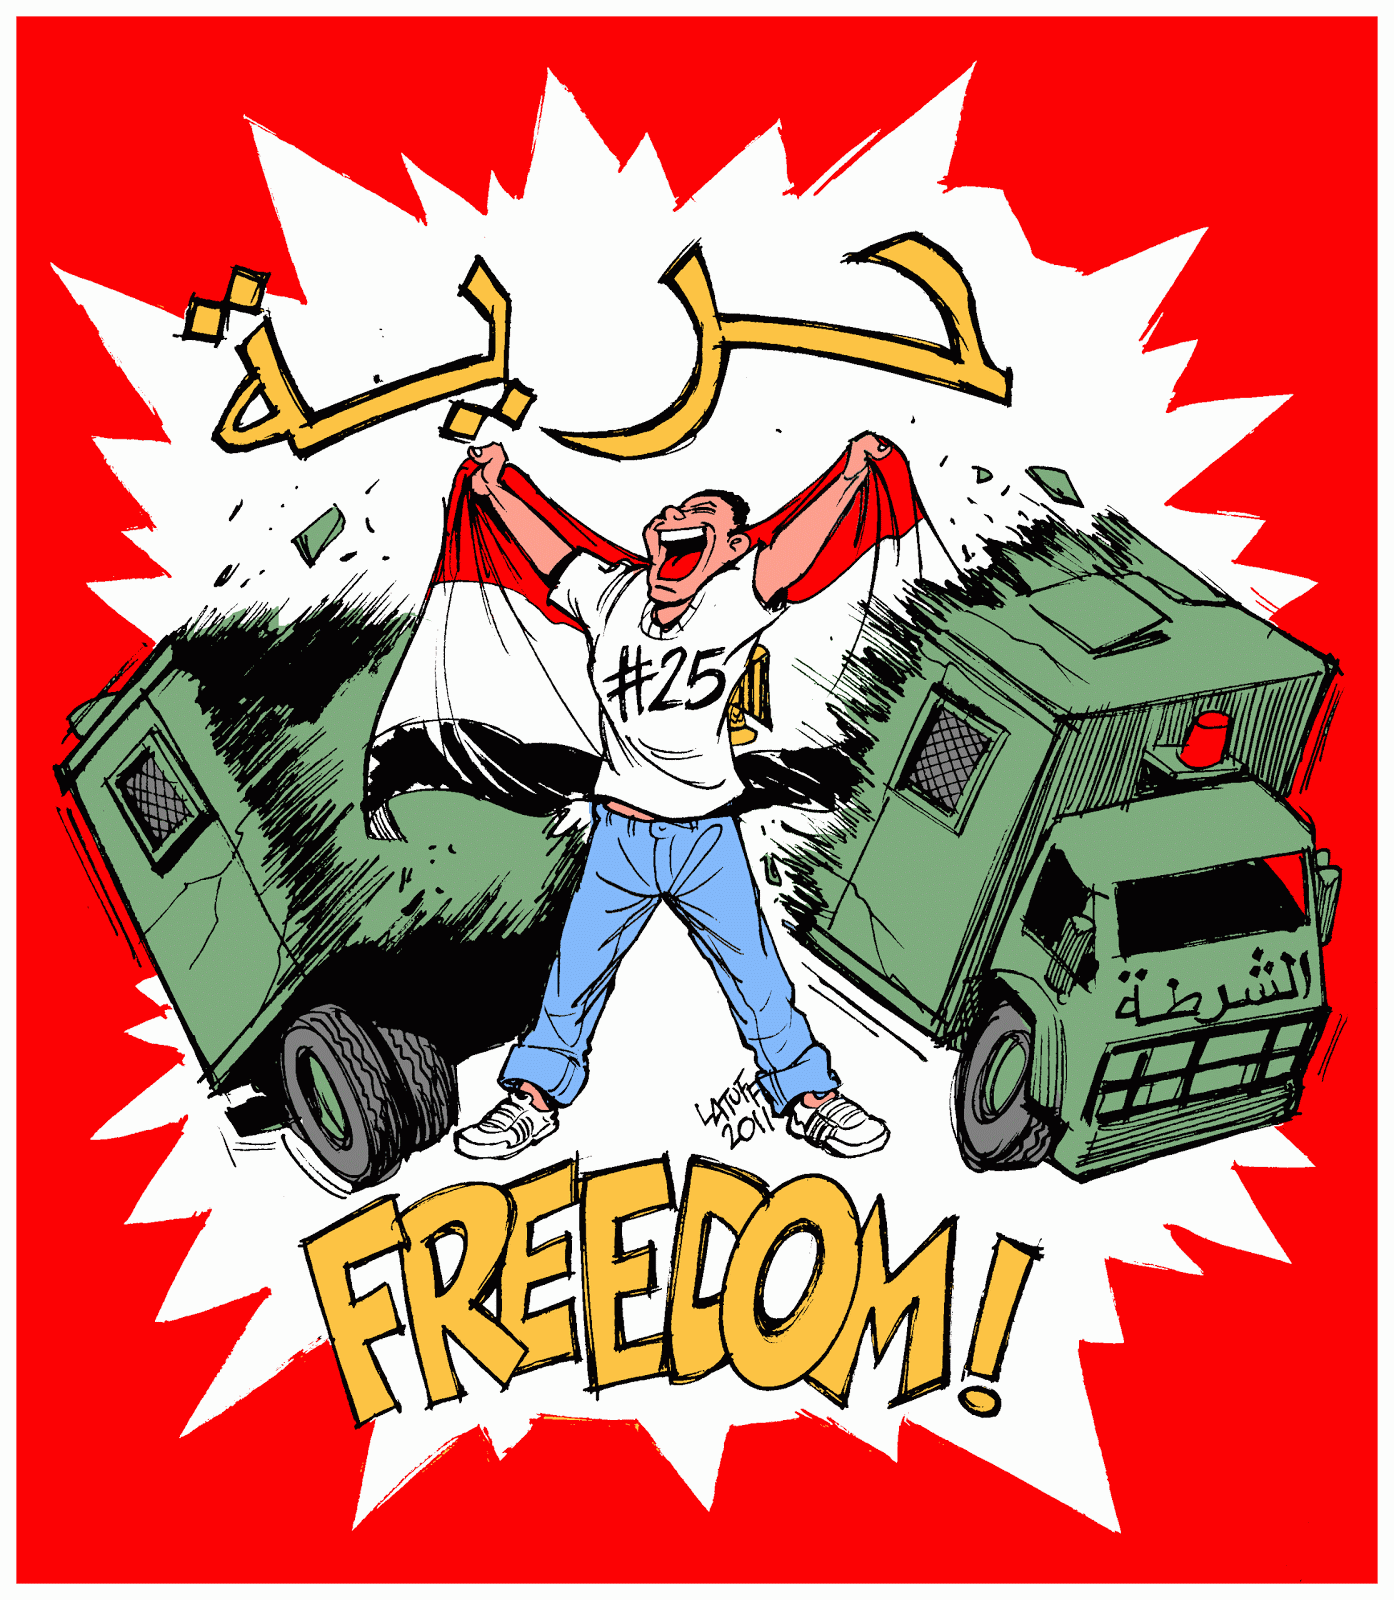 Police+Day+FREEDOM+Egypt+25Jan2011+M.gif